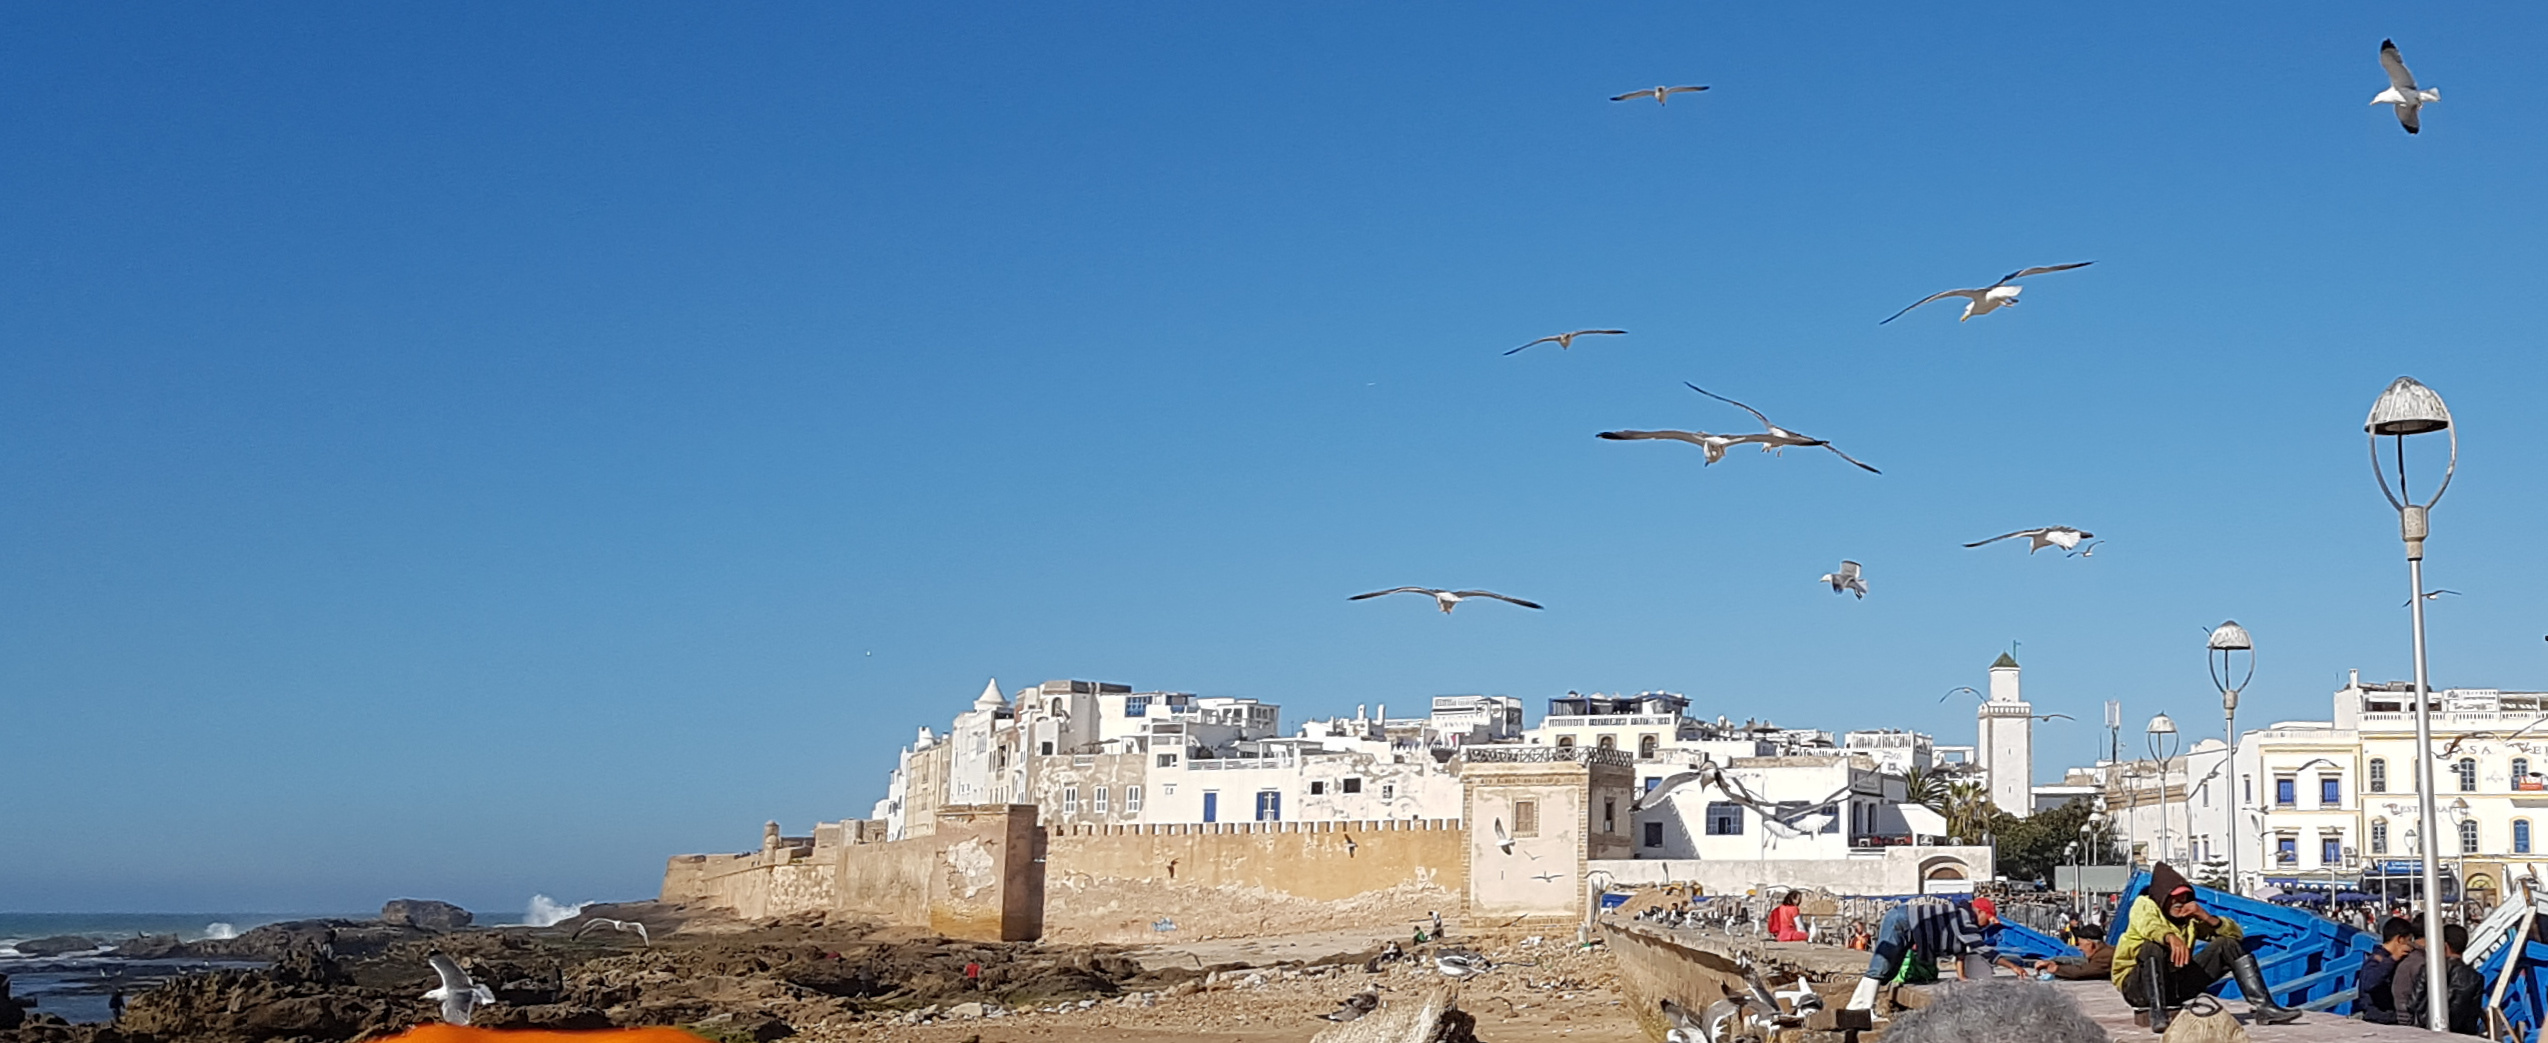 20180313-161815-Essaouira_Citadel-SR-2.jpg